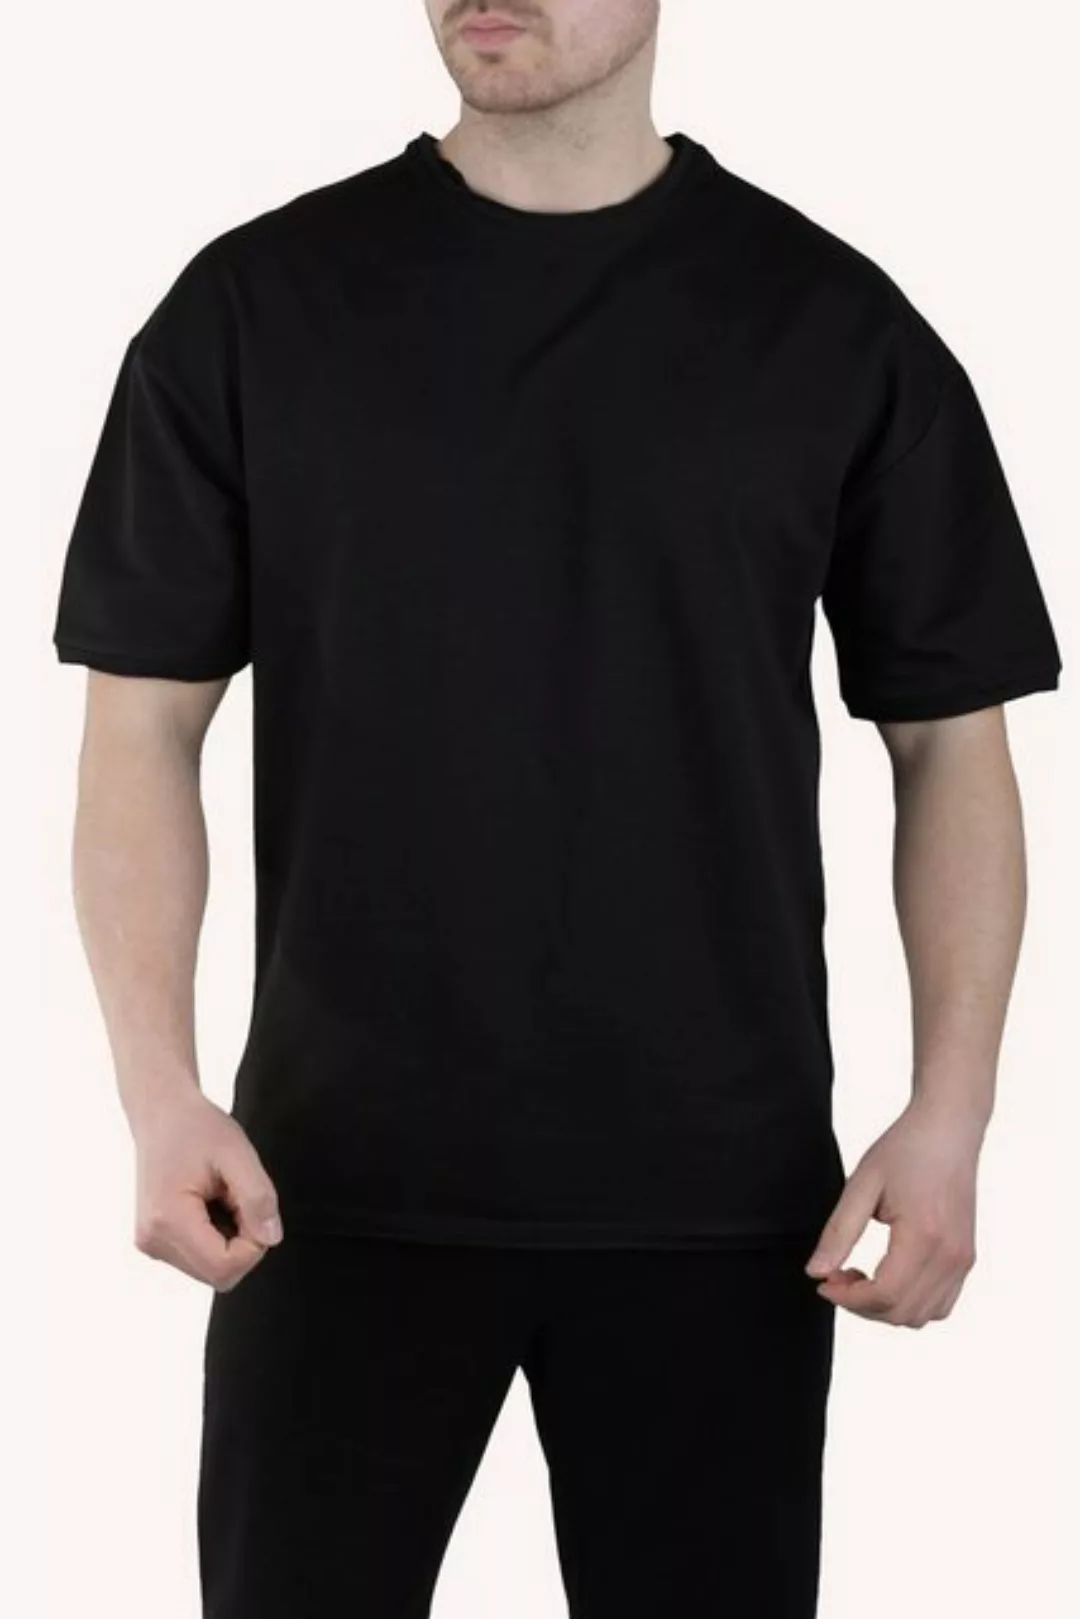 Megaman Jeans T-Shirt Herren T-Shirt Oversize Sommer Shirt Megaman TS5011 M günstig online kaufen